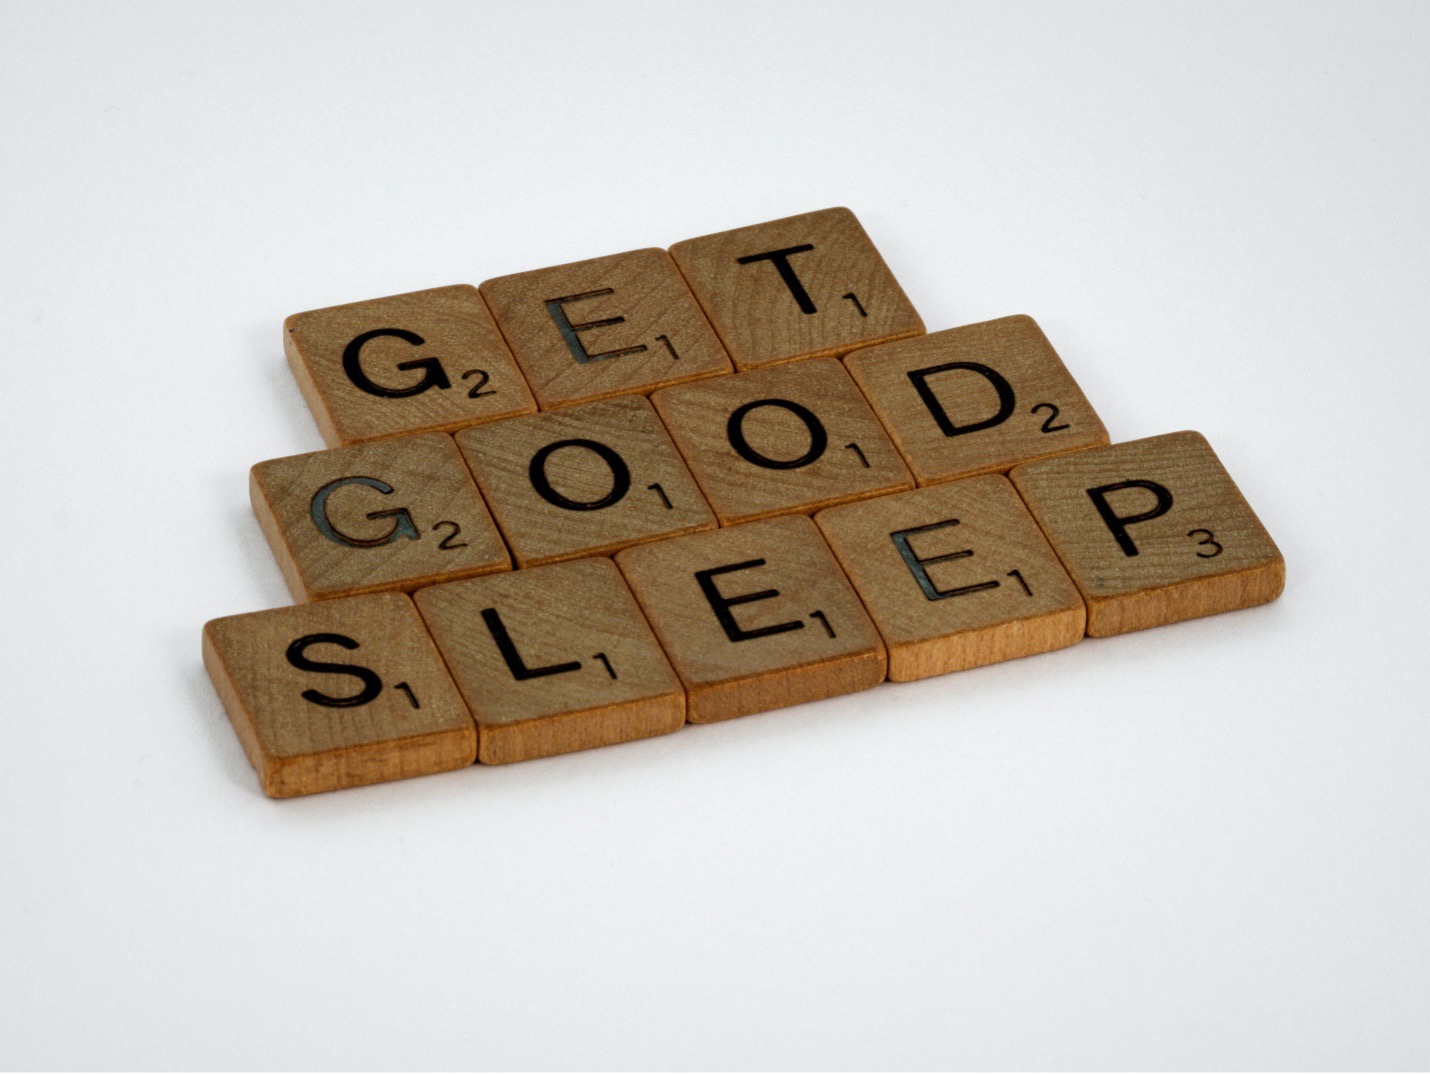 Wooden tiles reading "get good sleep"